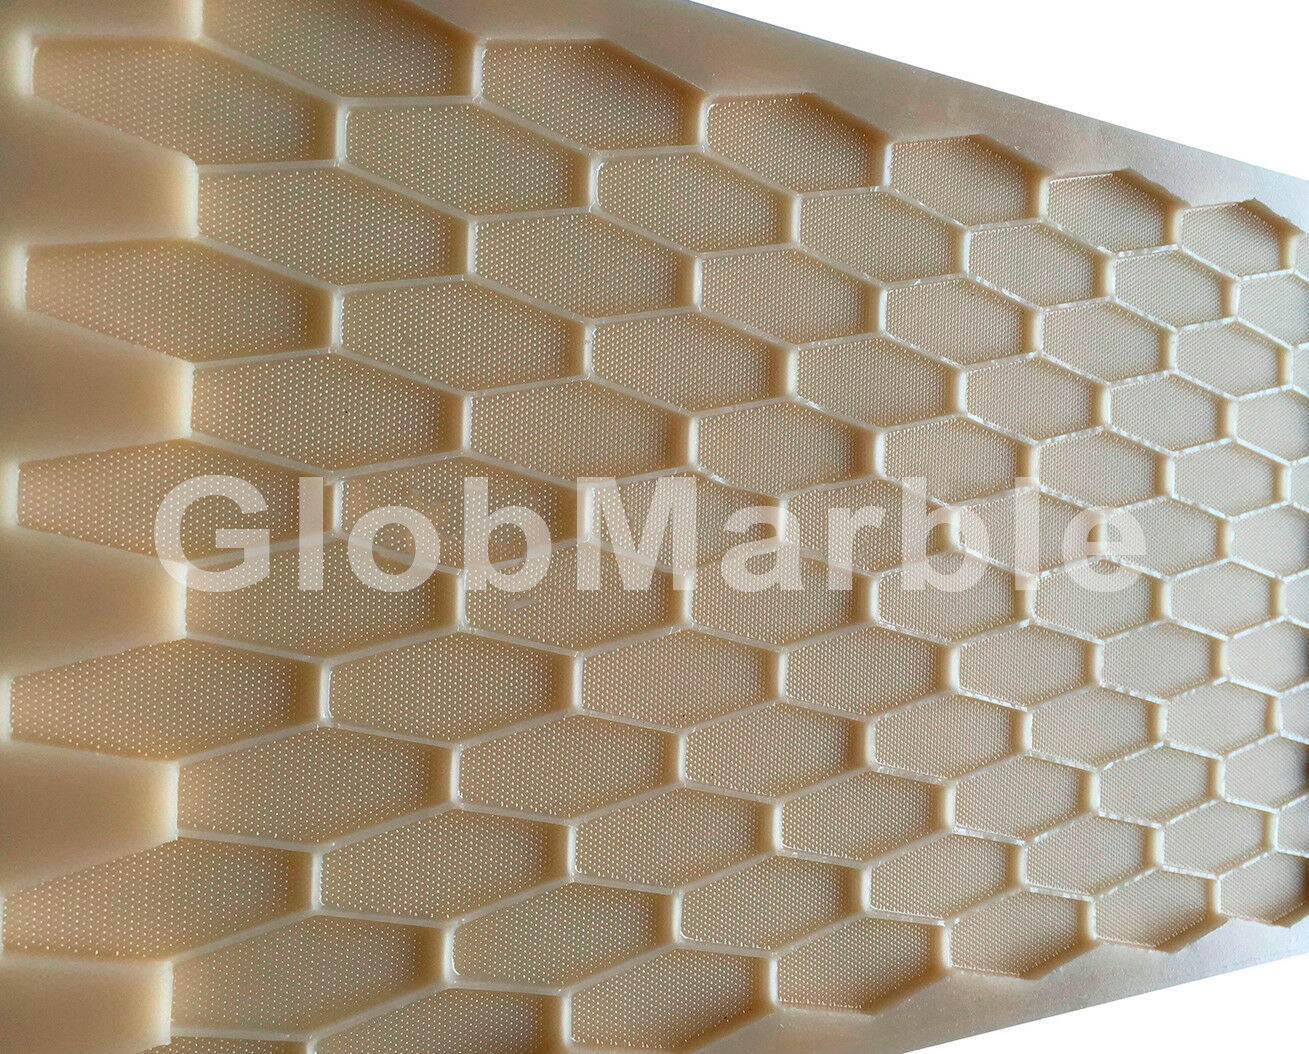 Concrete Stone Mold Mosaic Wall Panel Rubber Mold MS 823. Precast Mold. - $114.51